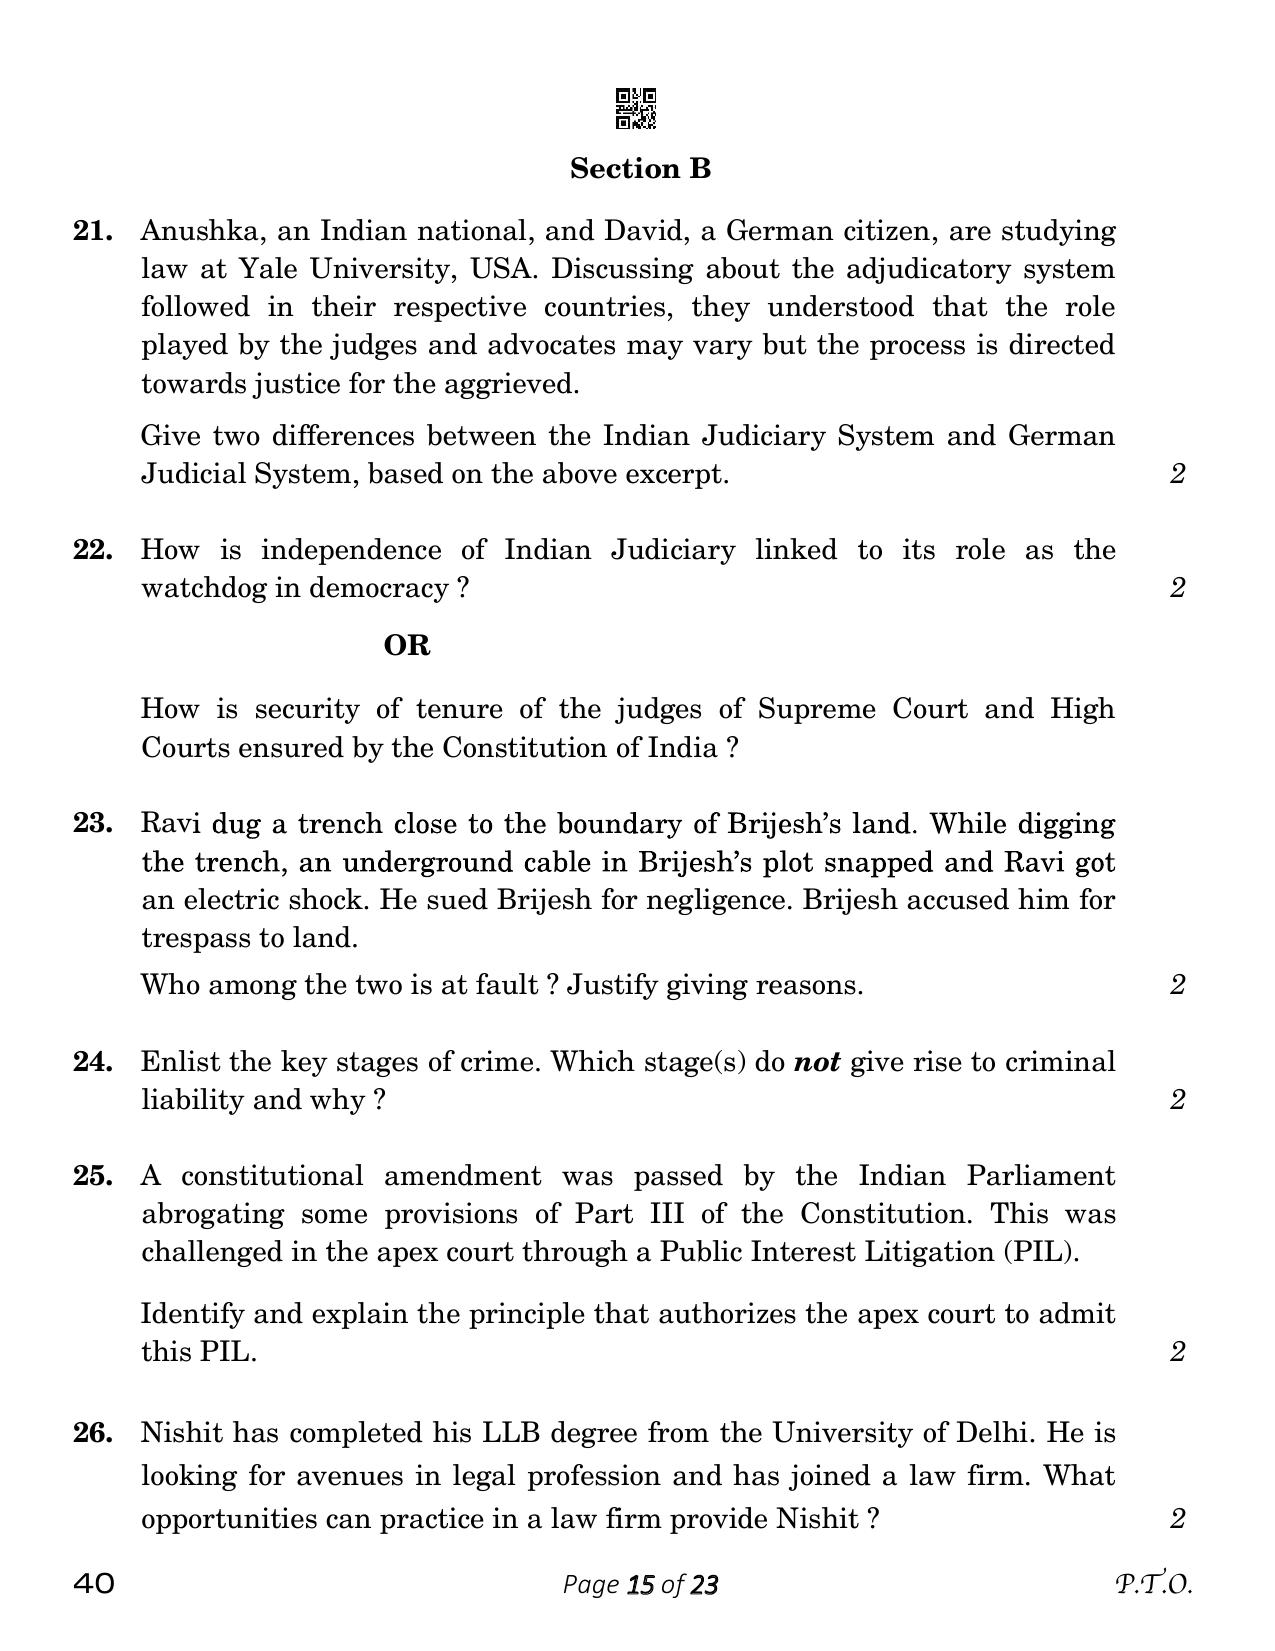 CBSE Class 12 Legal Studies (Compartment) 2023 Question Paper - Page 15